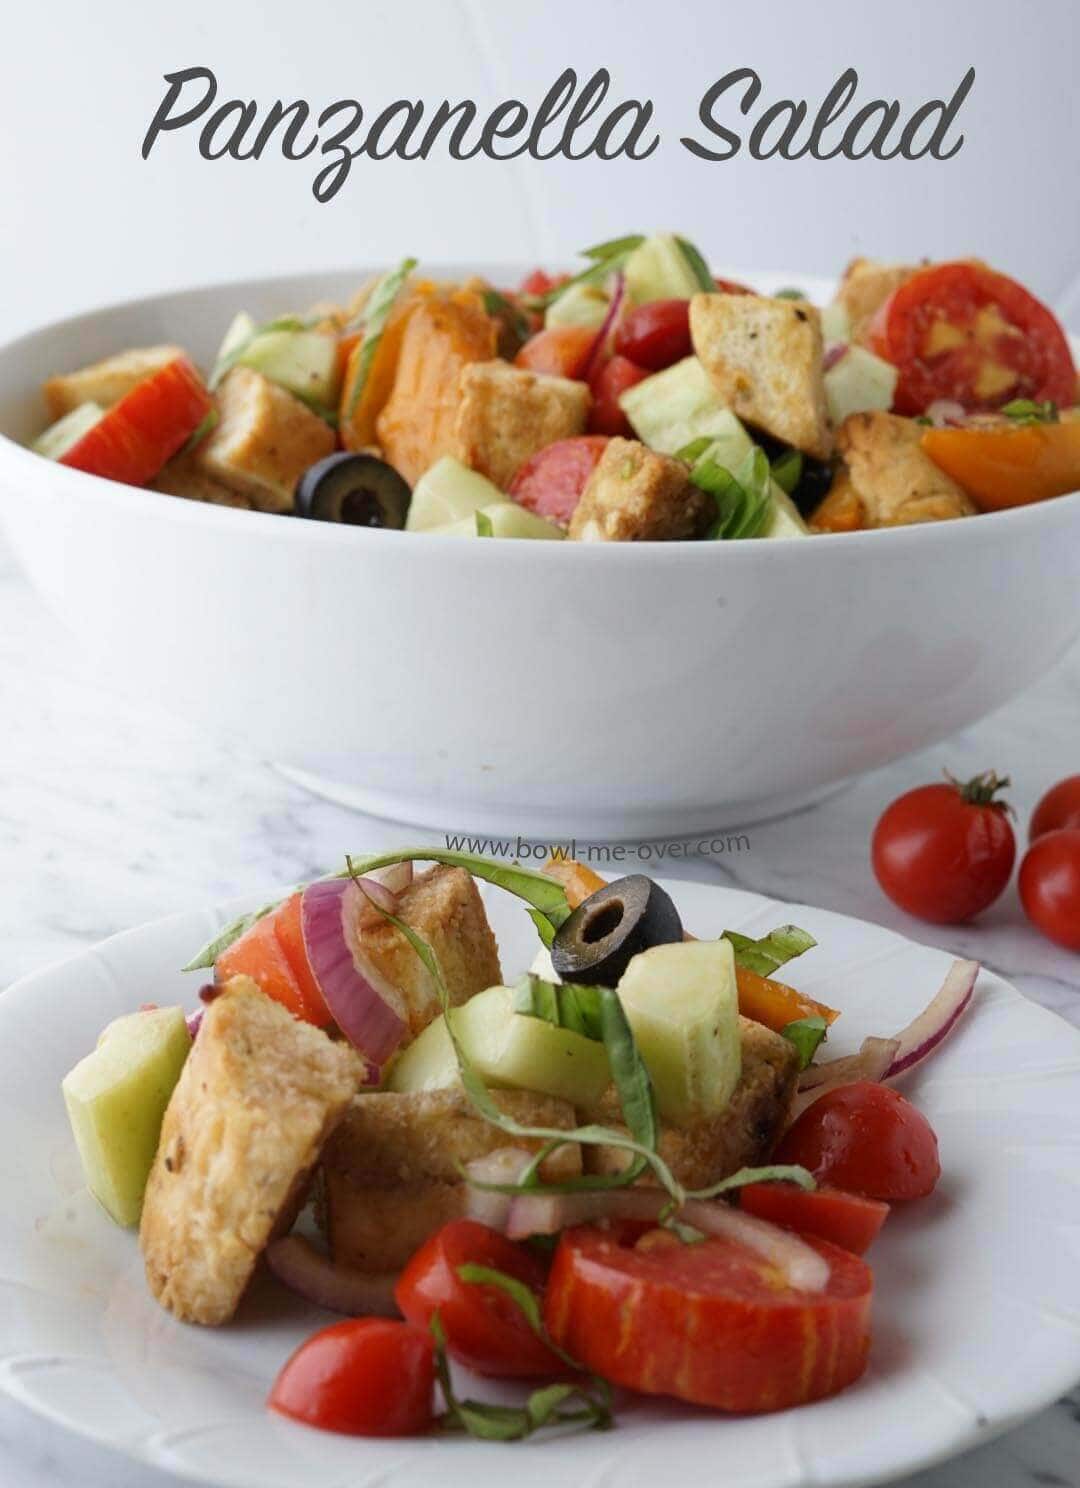 Panzanella Salad is a great summer salad!